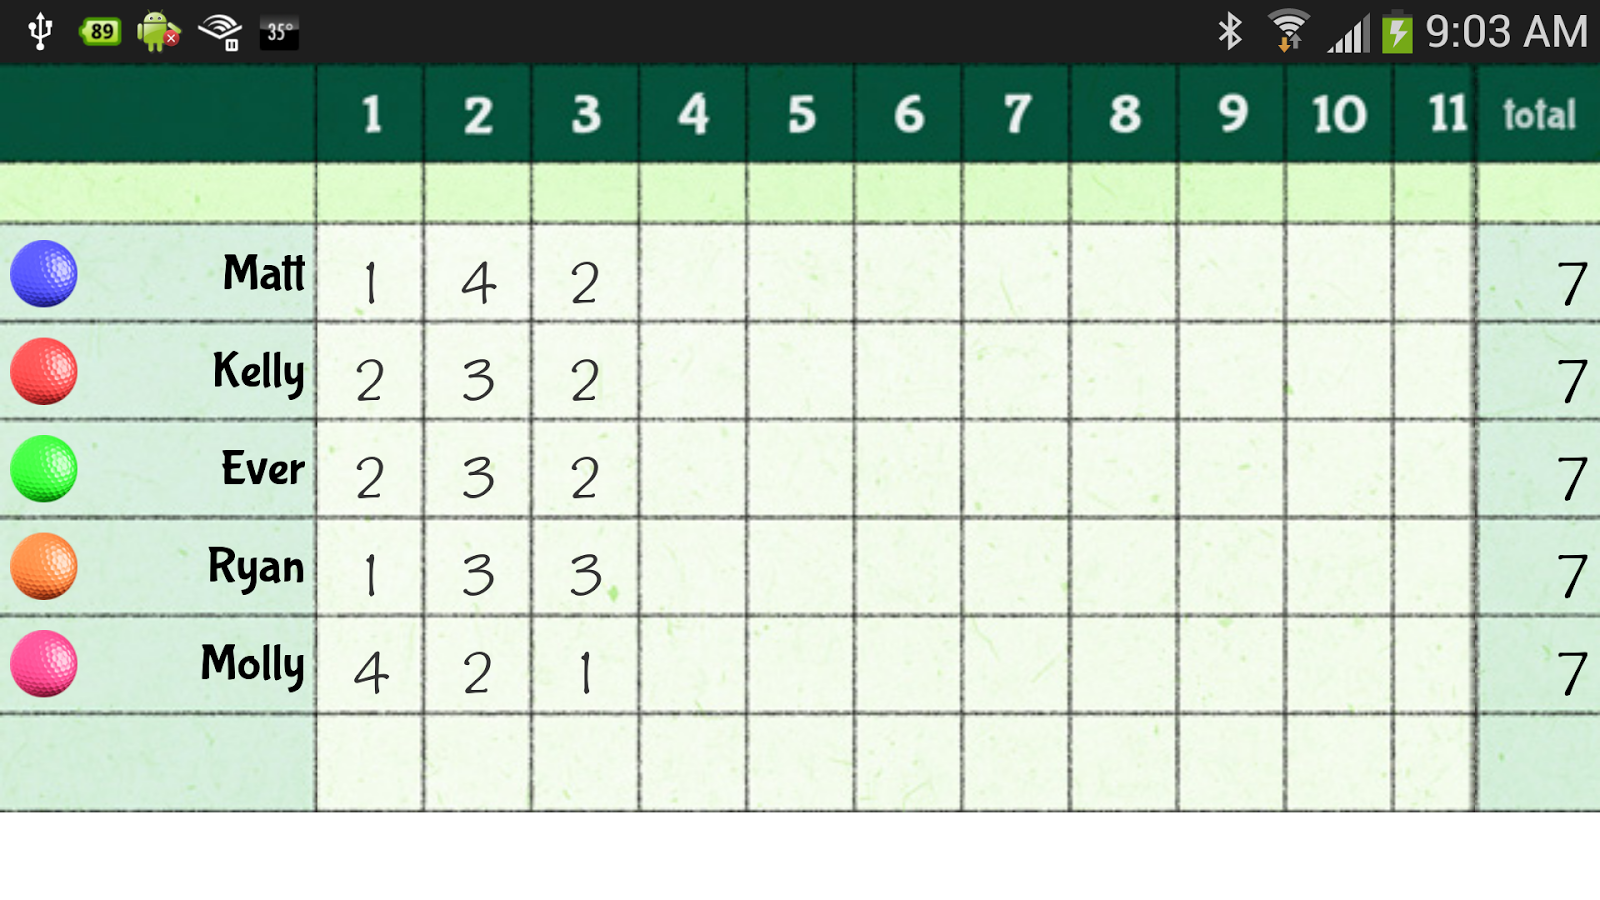 my-mini-golf-scorecard-android-apps-on-google-play